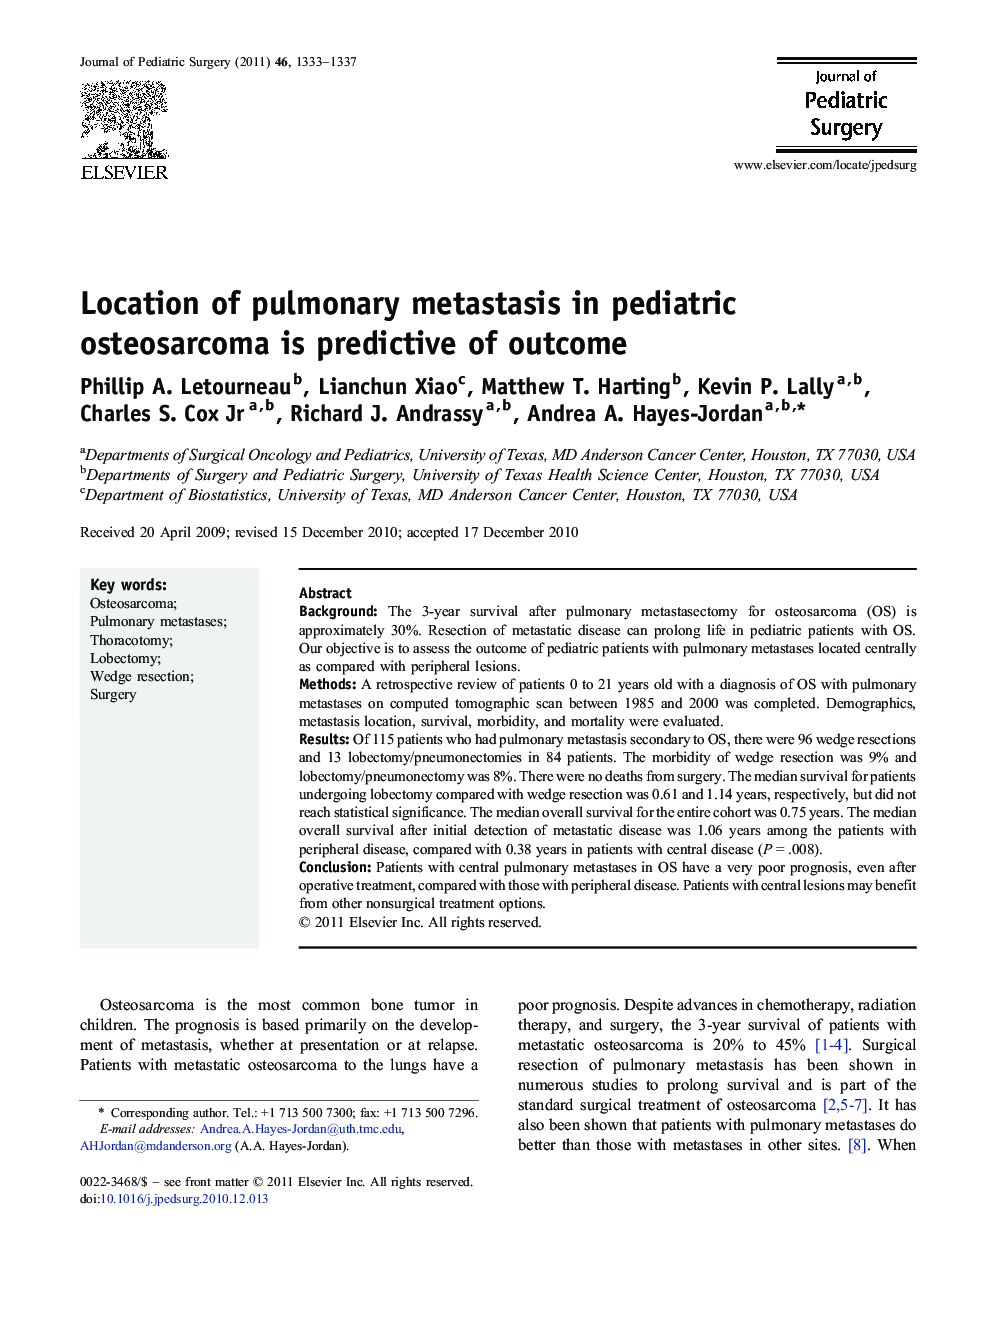 Location of pulmonary metastasis in pediatric osteosarcoma is predictive of outcome